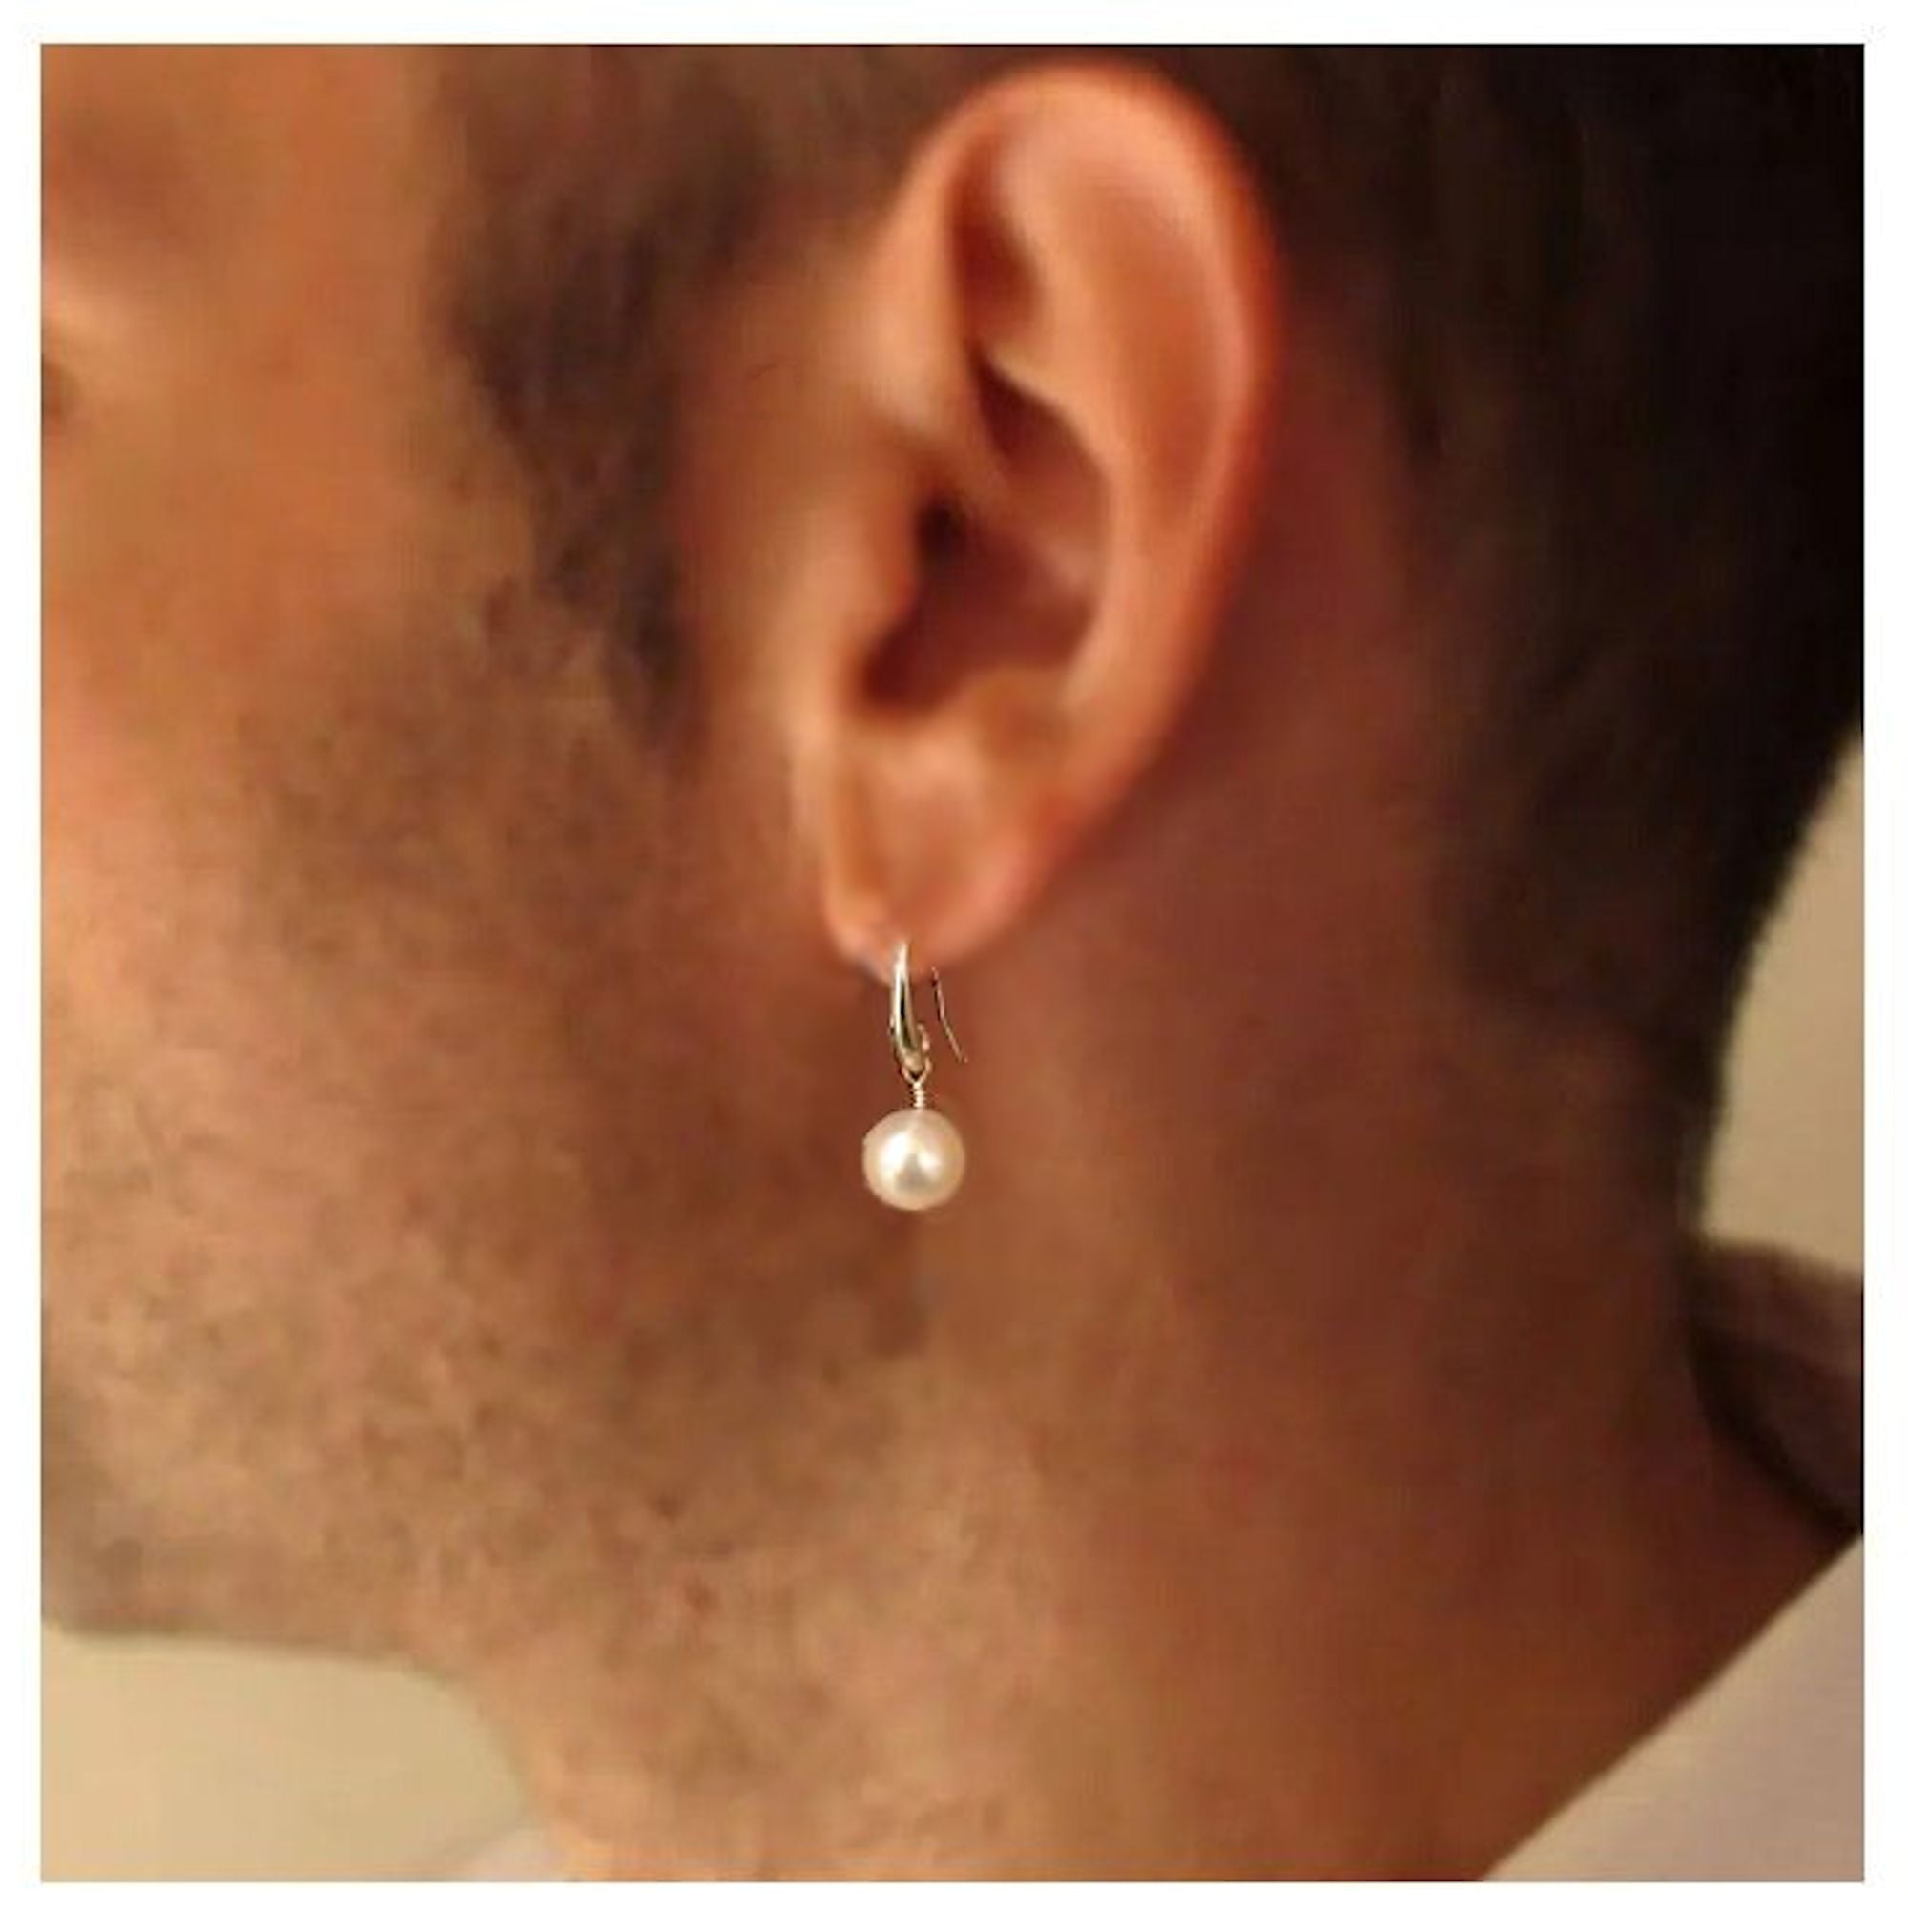 Buy Mens Earrings, Mens 6mm Stud Earrings, Round Stainless Steel Silver  Studs Earrings for Men, Stud Earring Men, Mens Jewelry by Twistedpendant  Online in India - Etsy